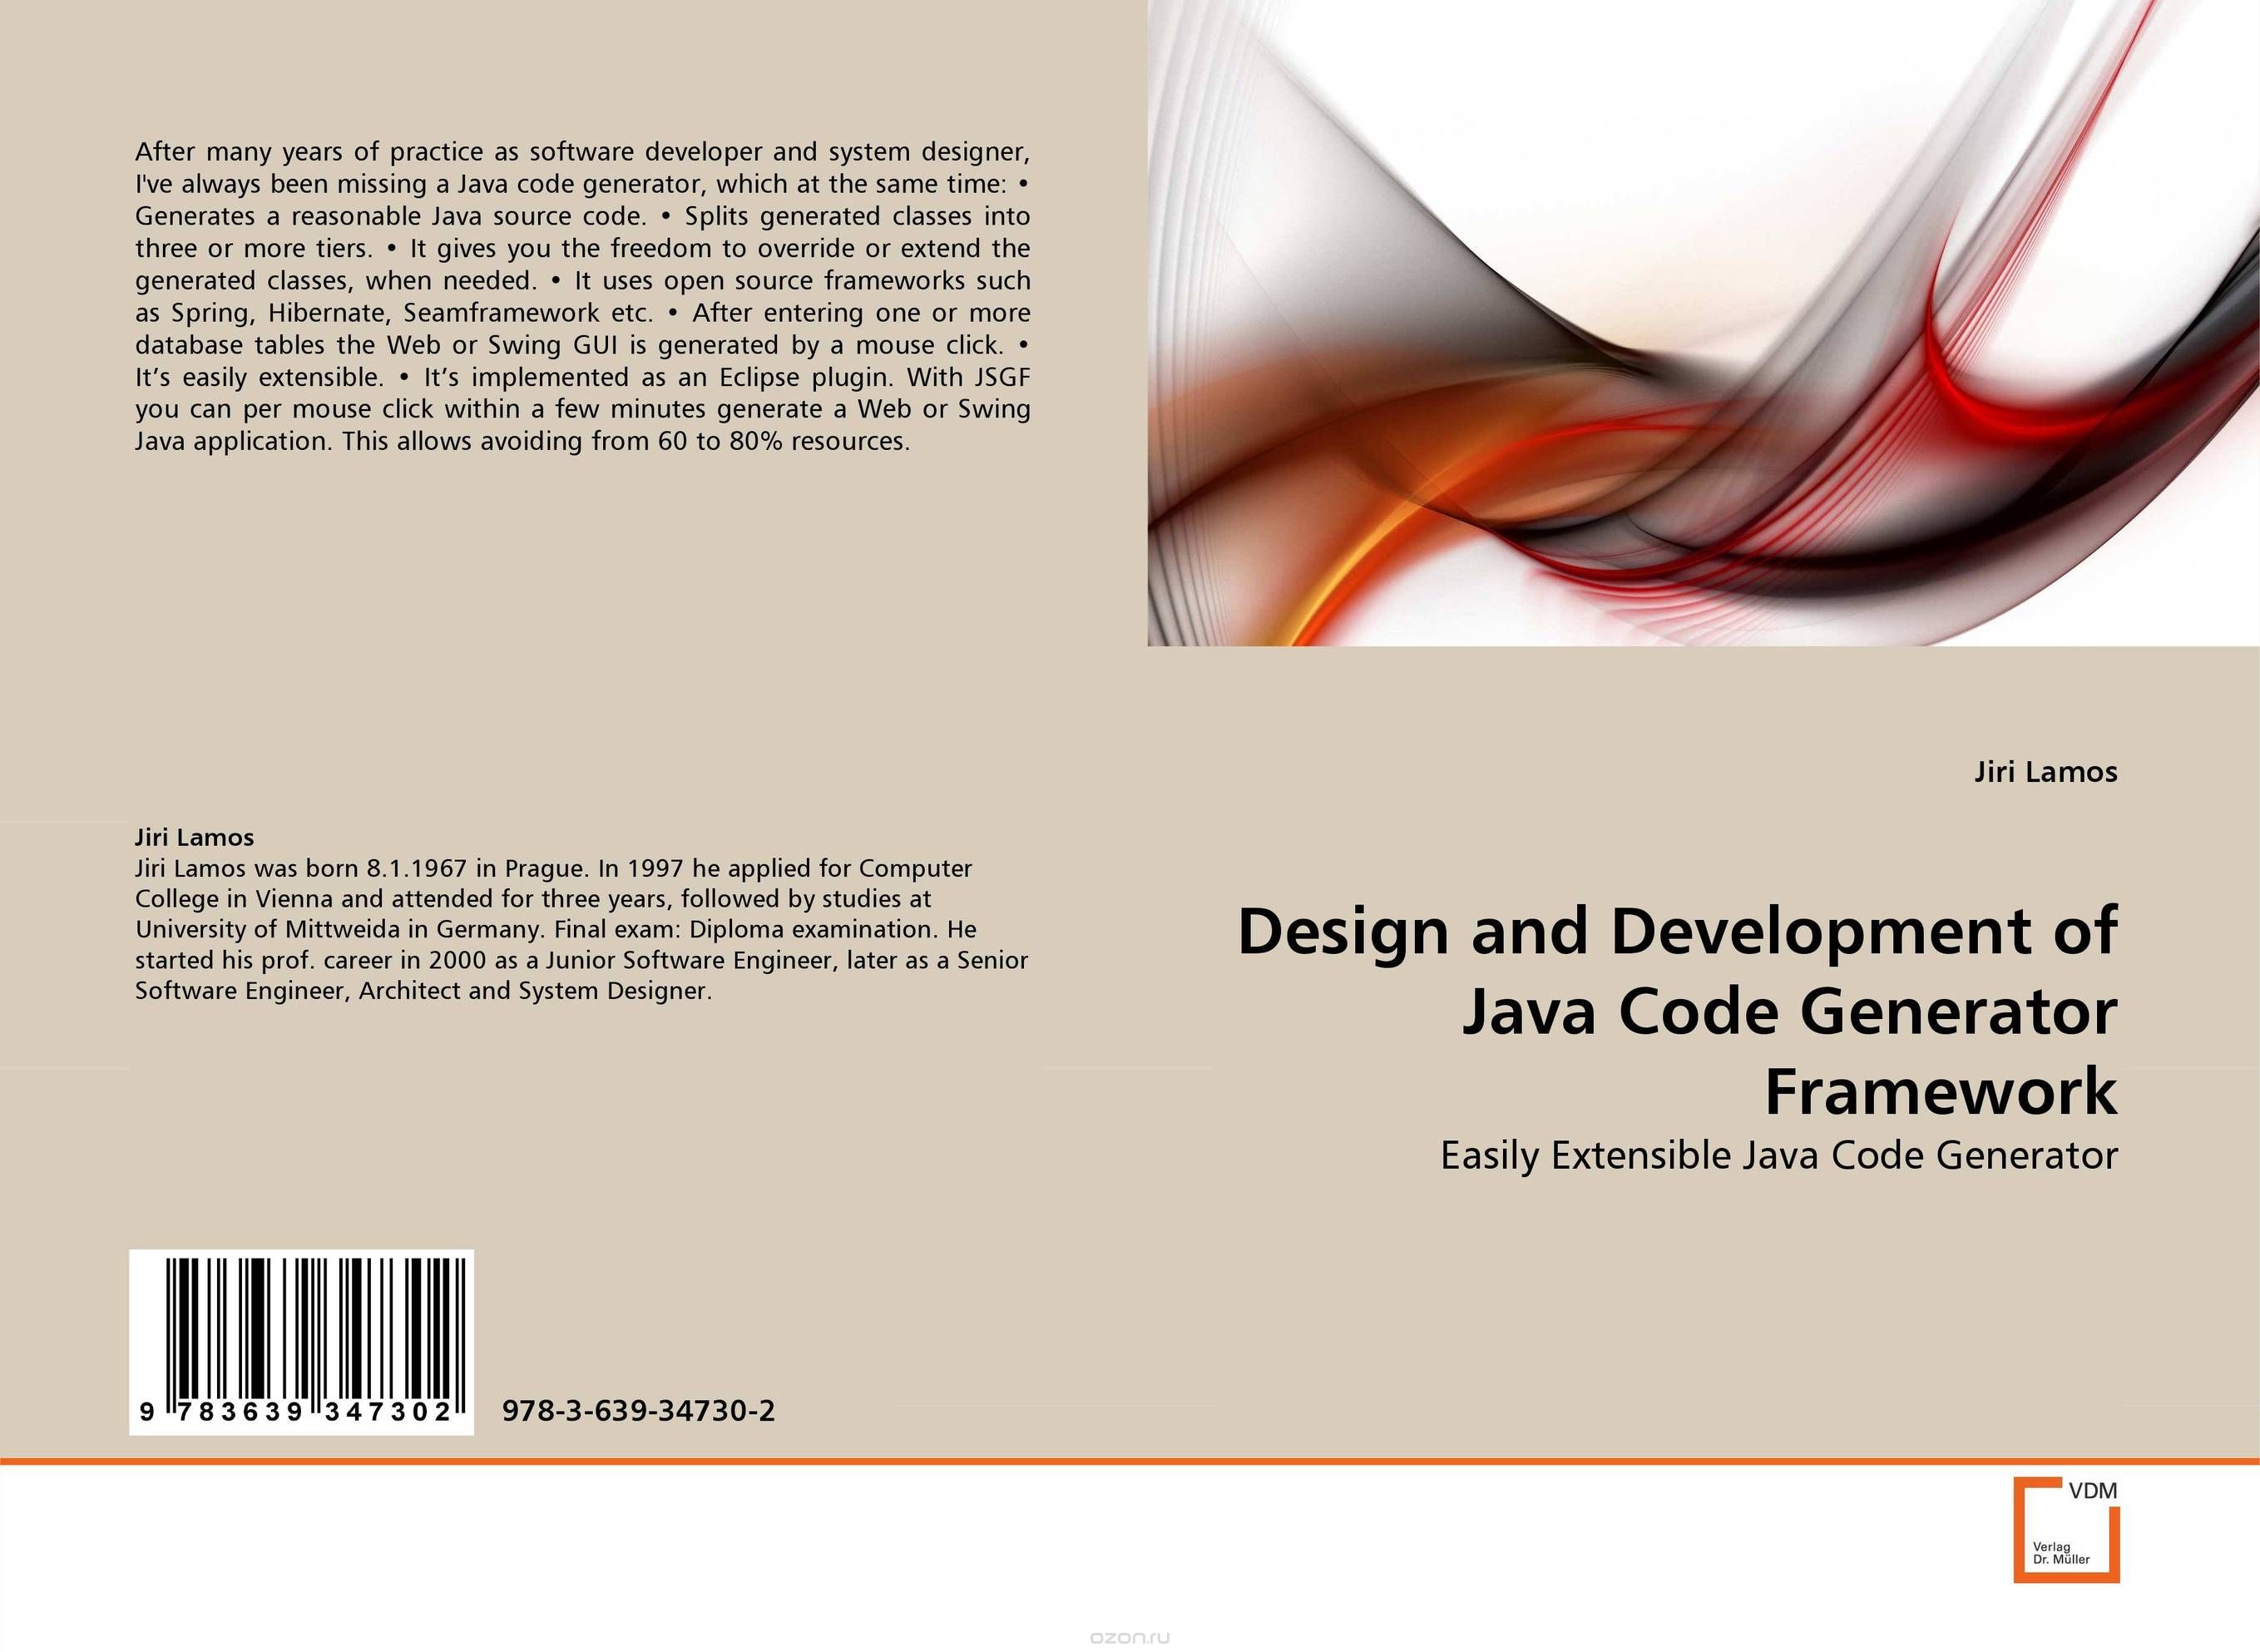 Скачать книгу "Design and Development of Java Code Generator Framework"